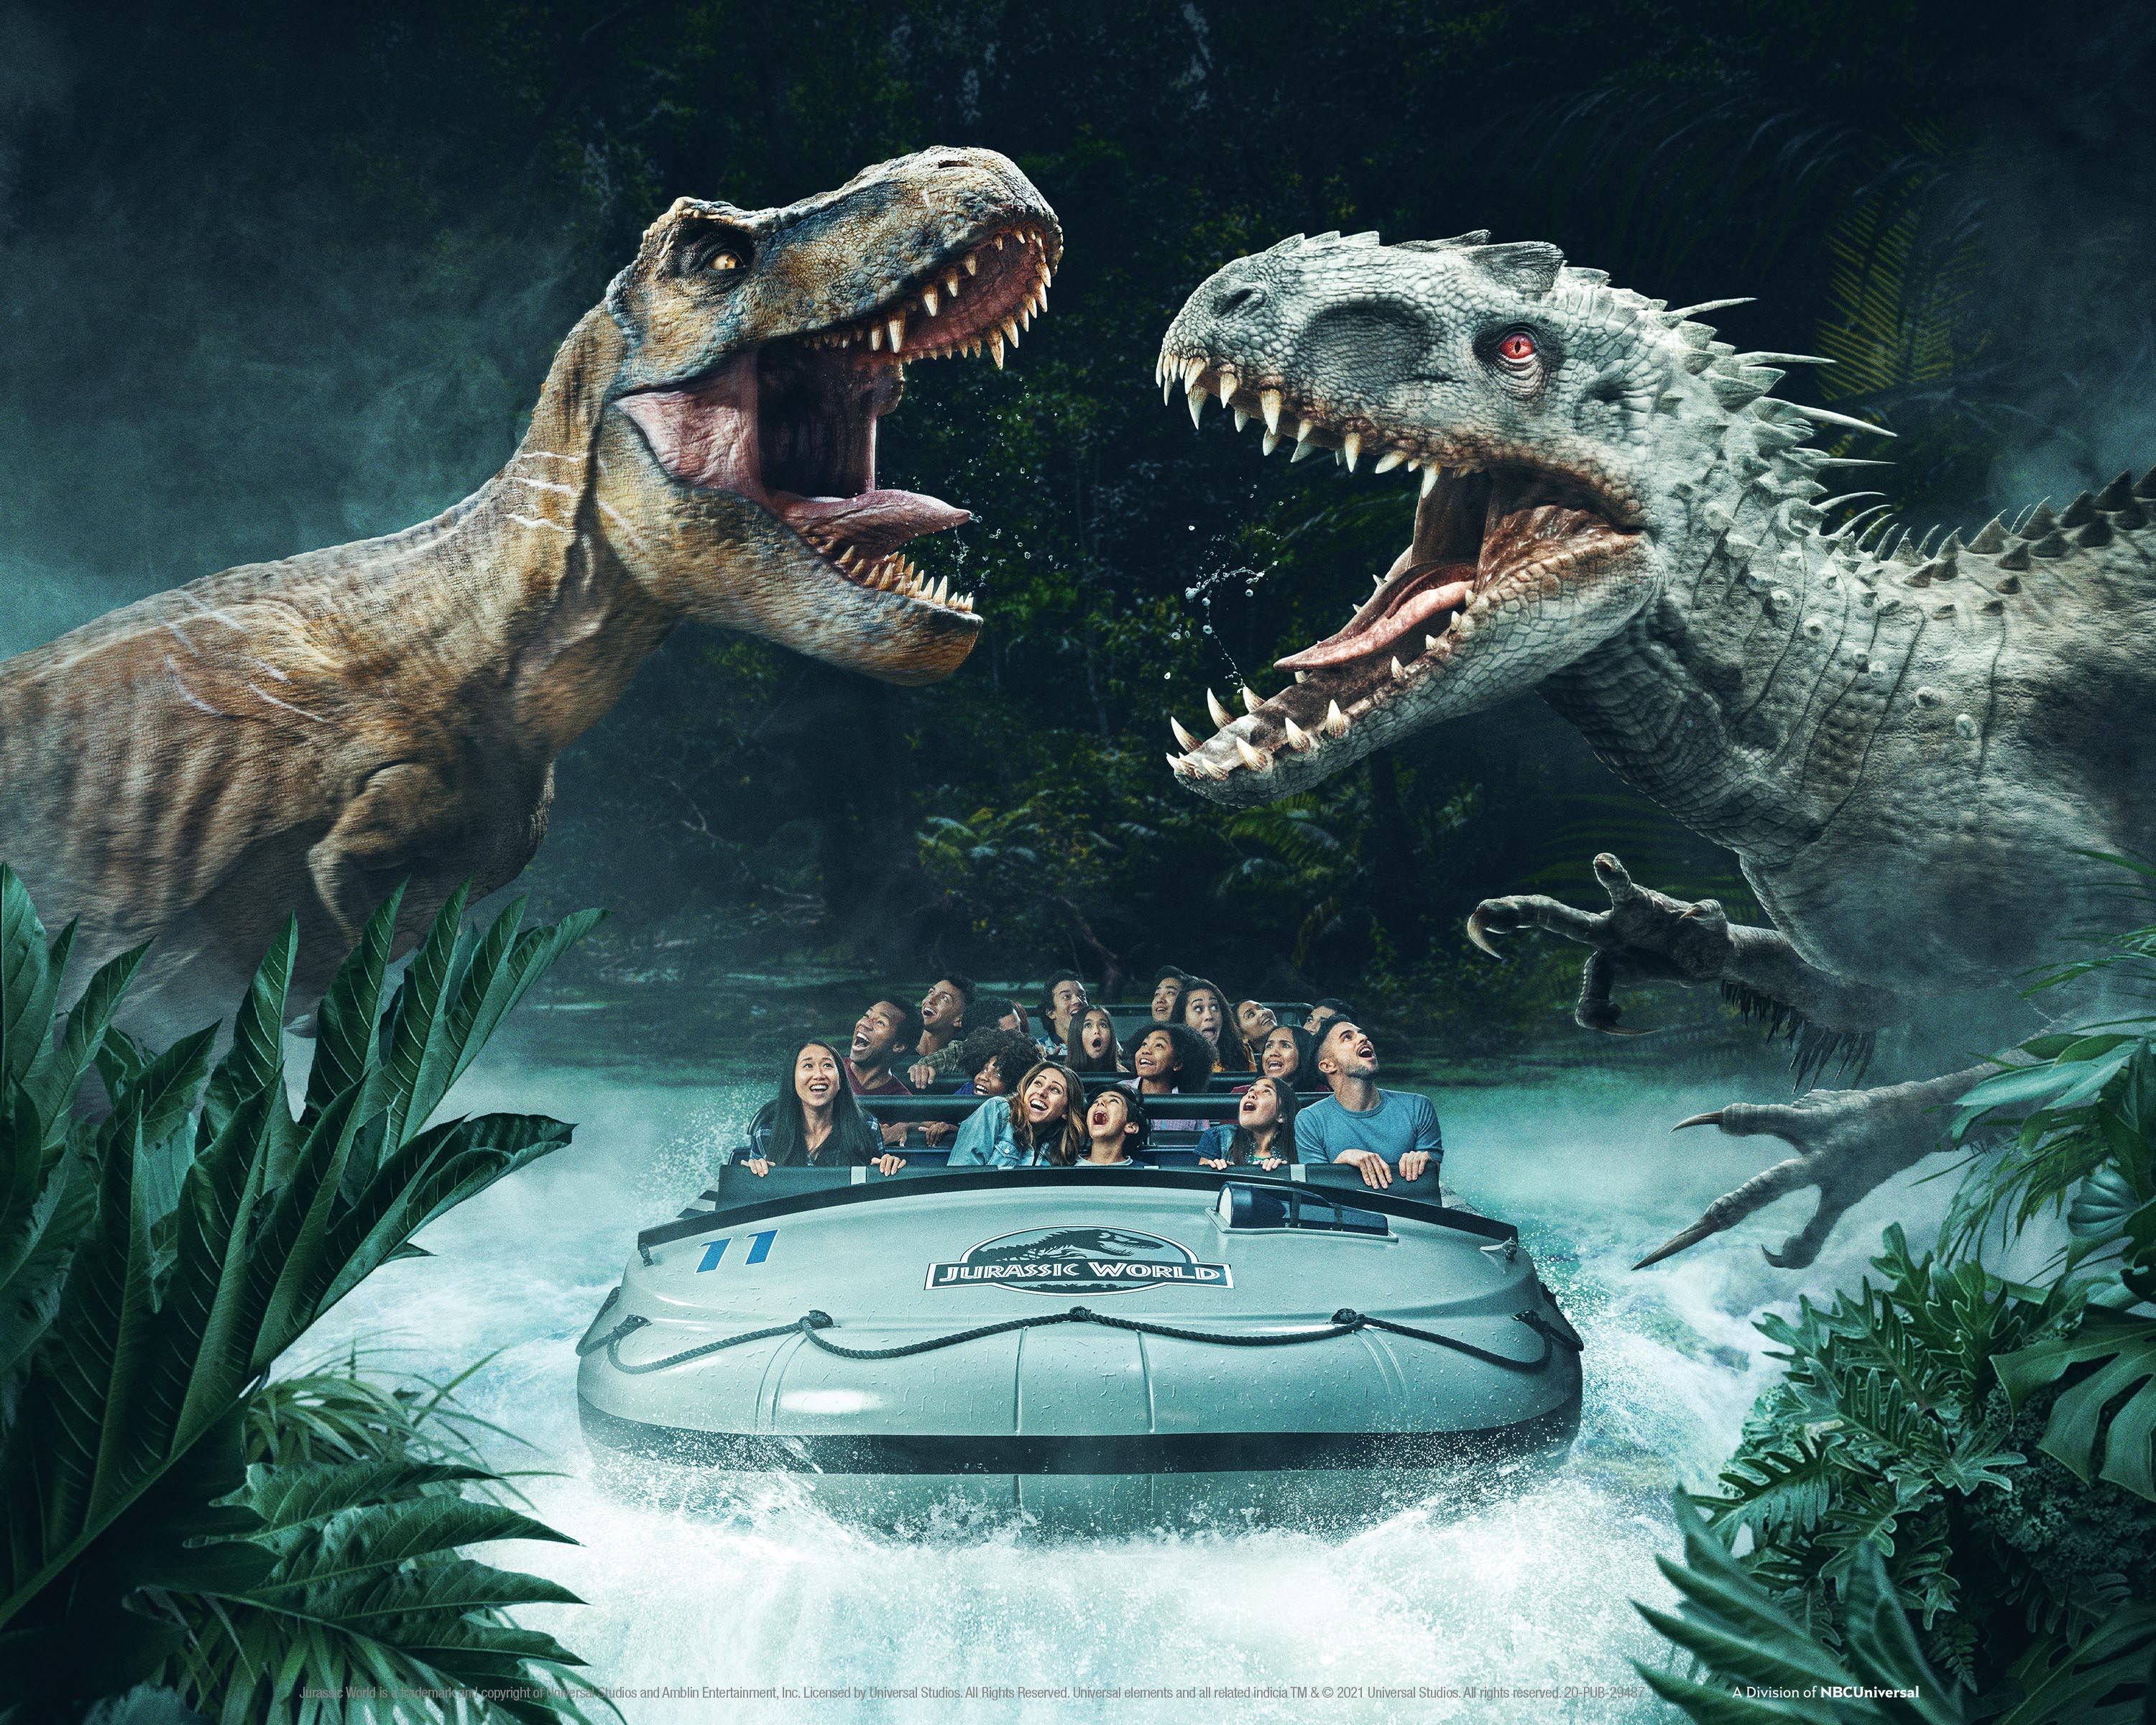 Concept art for Jurassic World: The Ride